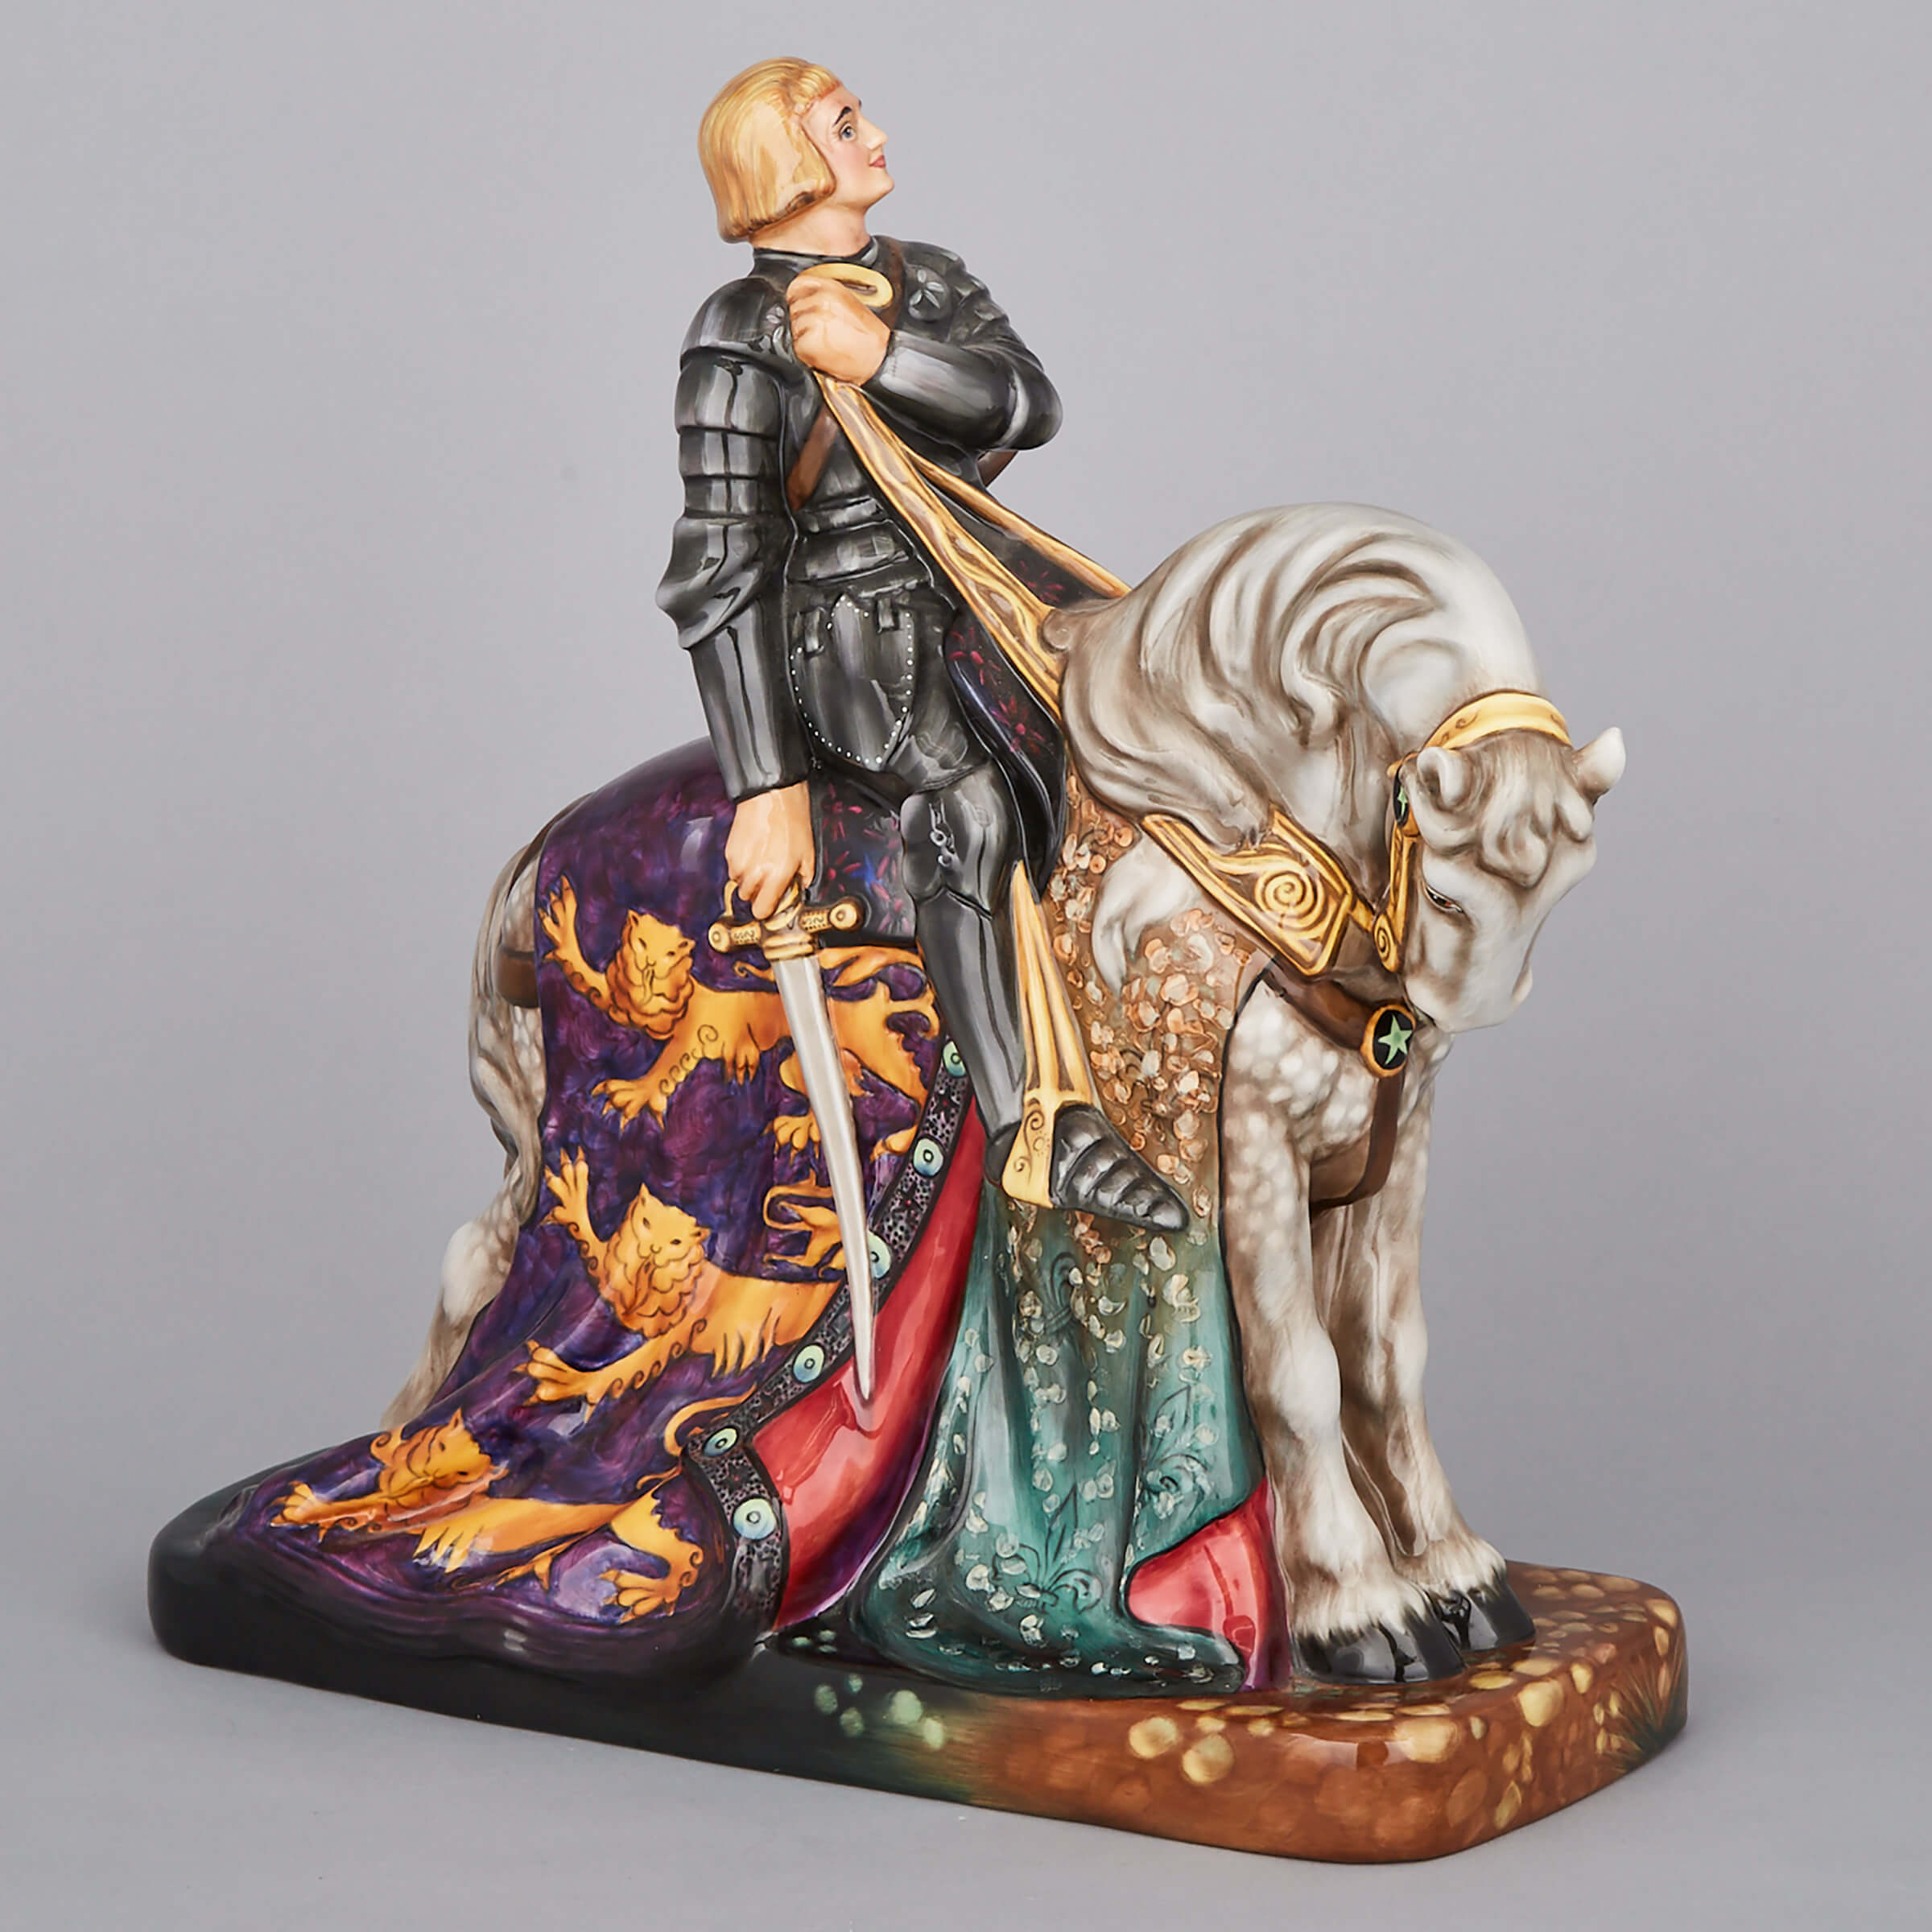 ‘St. George’, Royal Doulton Figure, HN 2067, 20th century